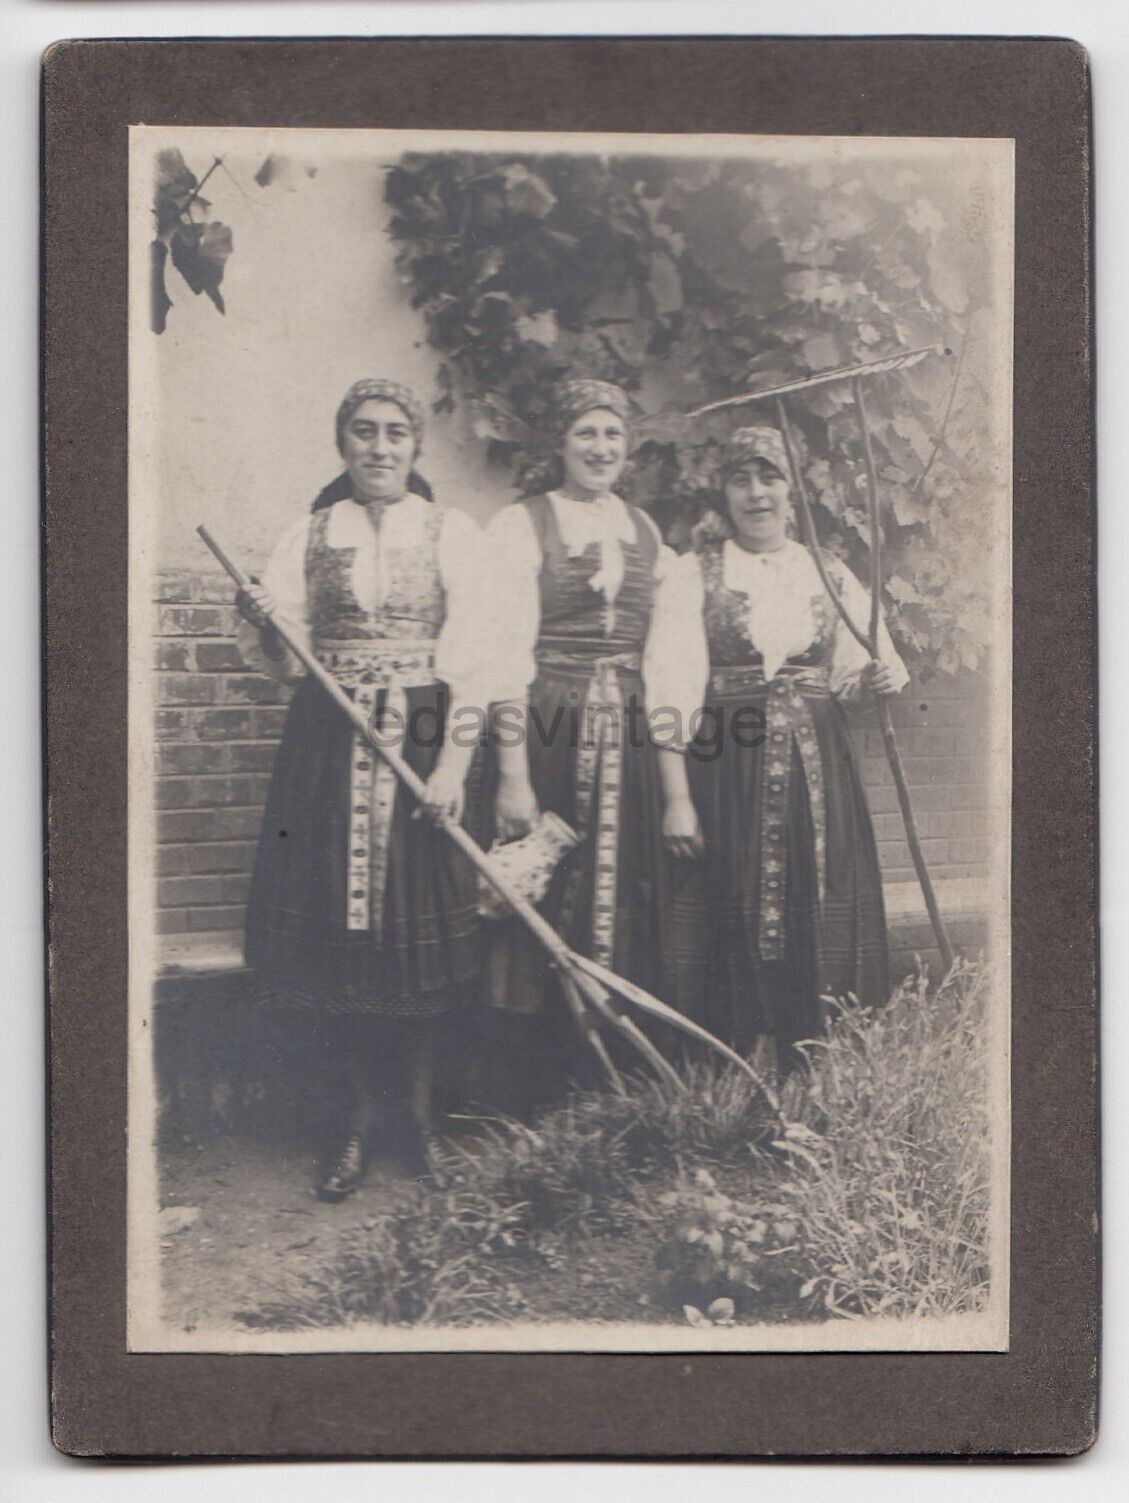 Three girls Peasant women National costume dress Europe CP antique arcade photo